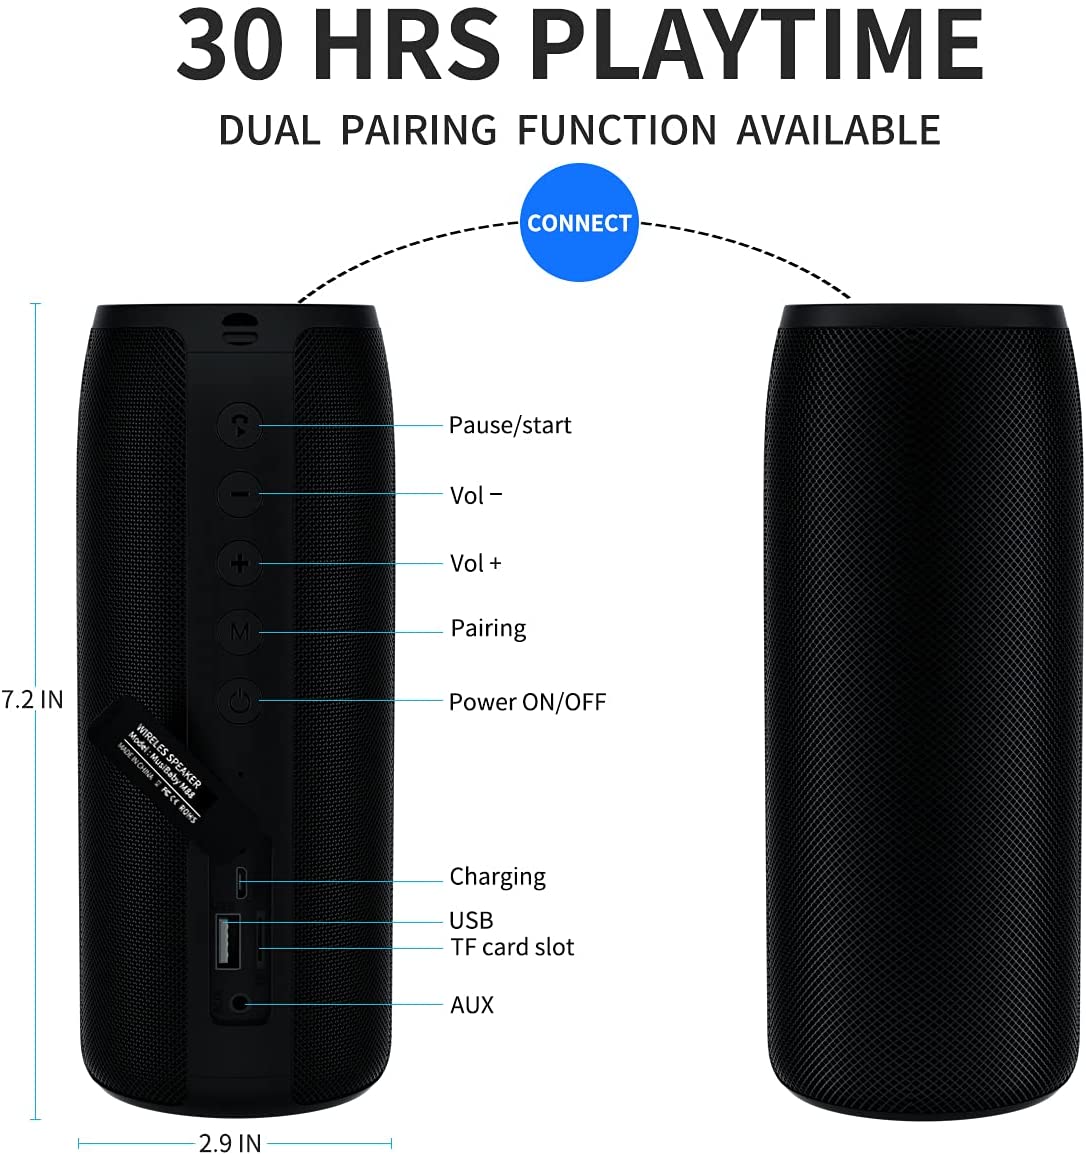 Aursear Waterproof Bluetooth Speaker, Portable Outdoor Wireless Speaker with Loud Stereo Sound, 30H Playtime,Black - image 3 of 9